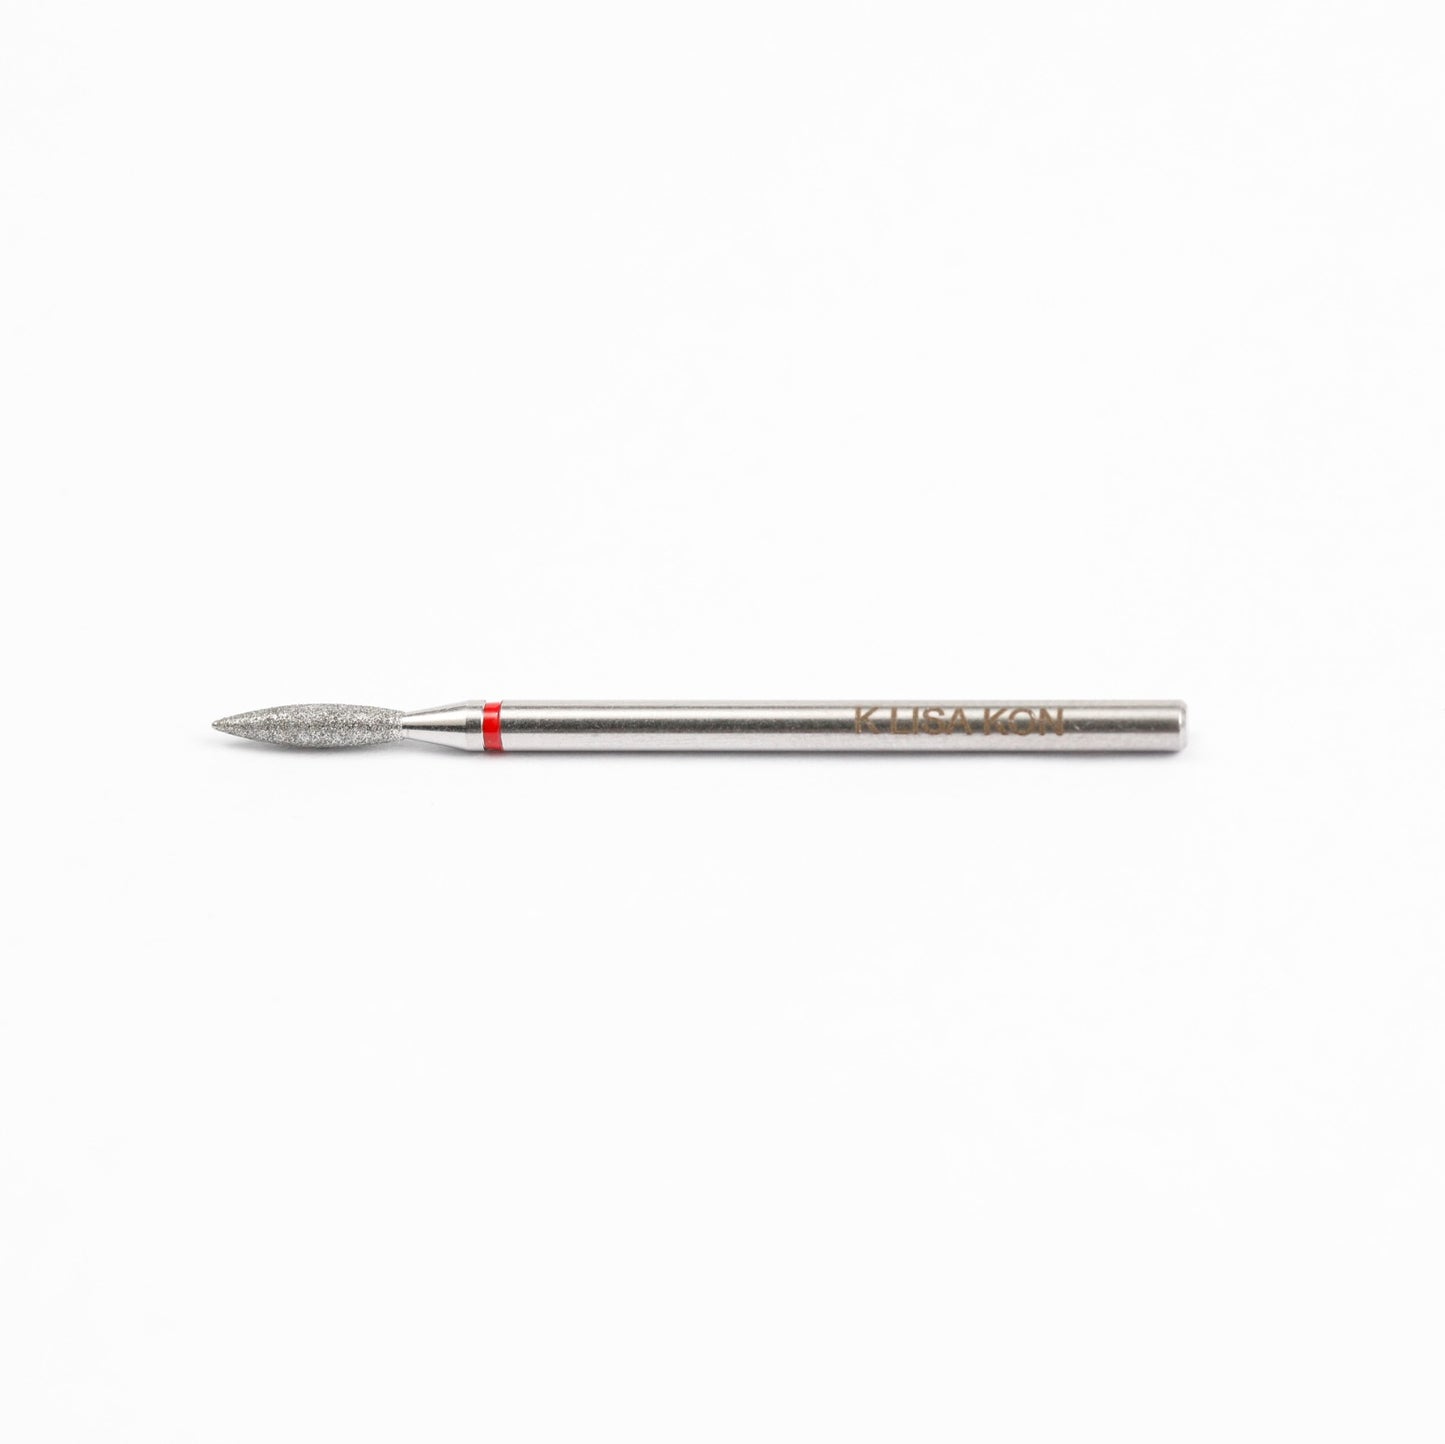 Lisakon - Diamond nail drill bit flame red EXPERT head diameter 2,1 mm / working part 8 mm